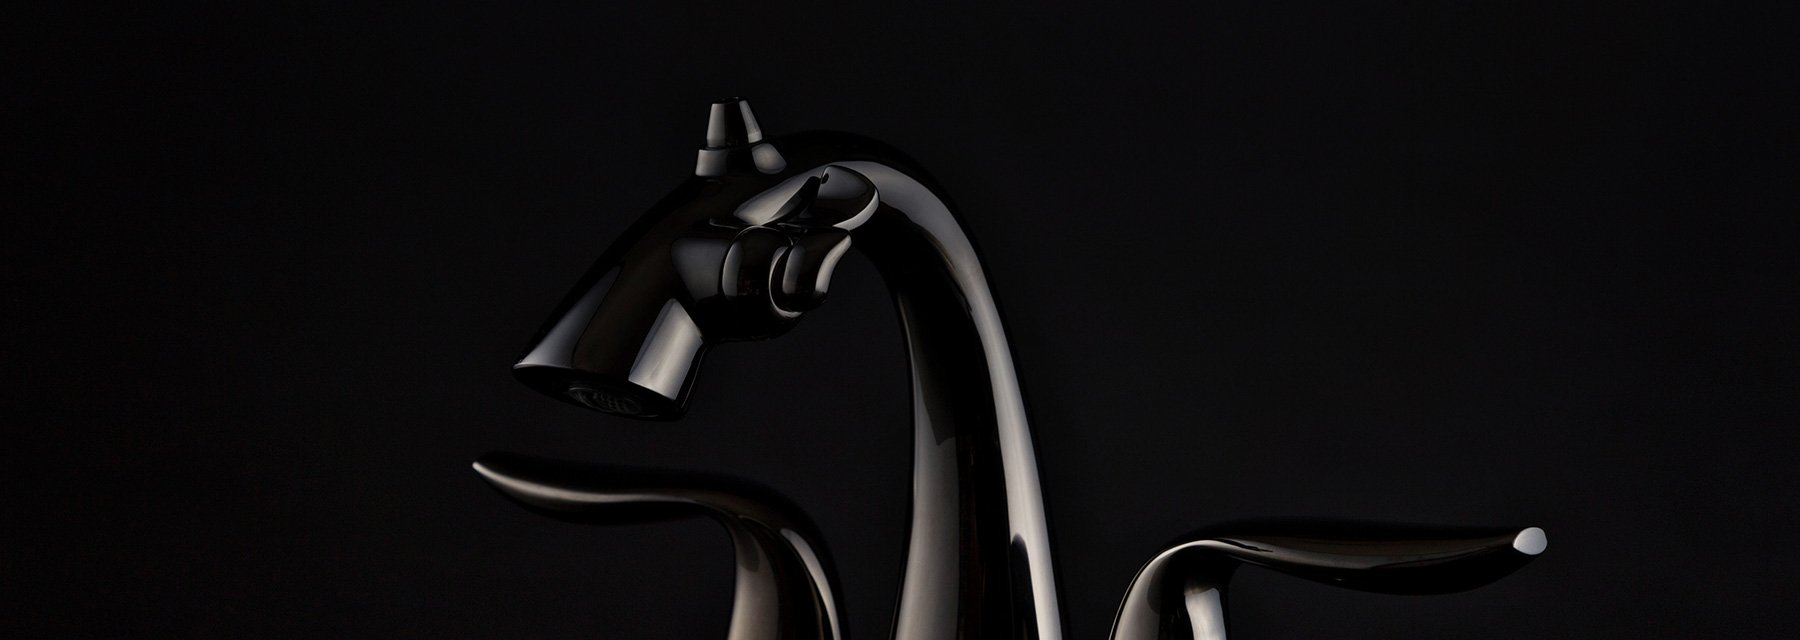 Gloss Black Nickel Nasoni Centerset Faucet on Seamless Black Background